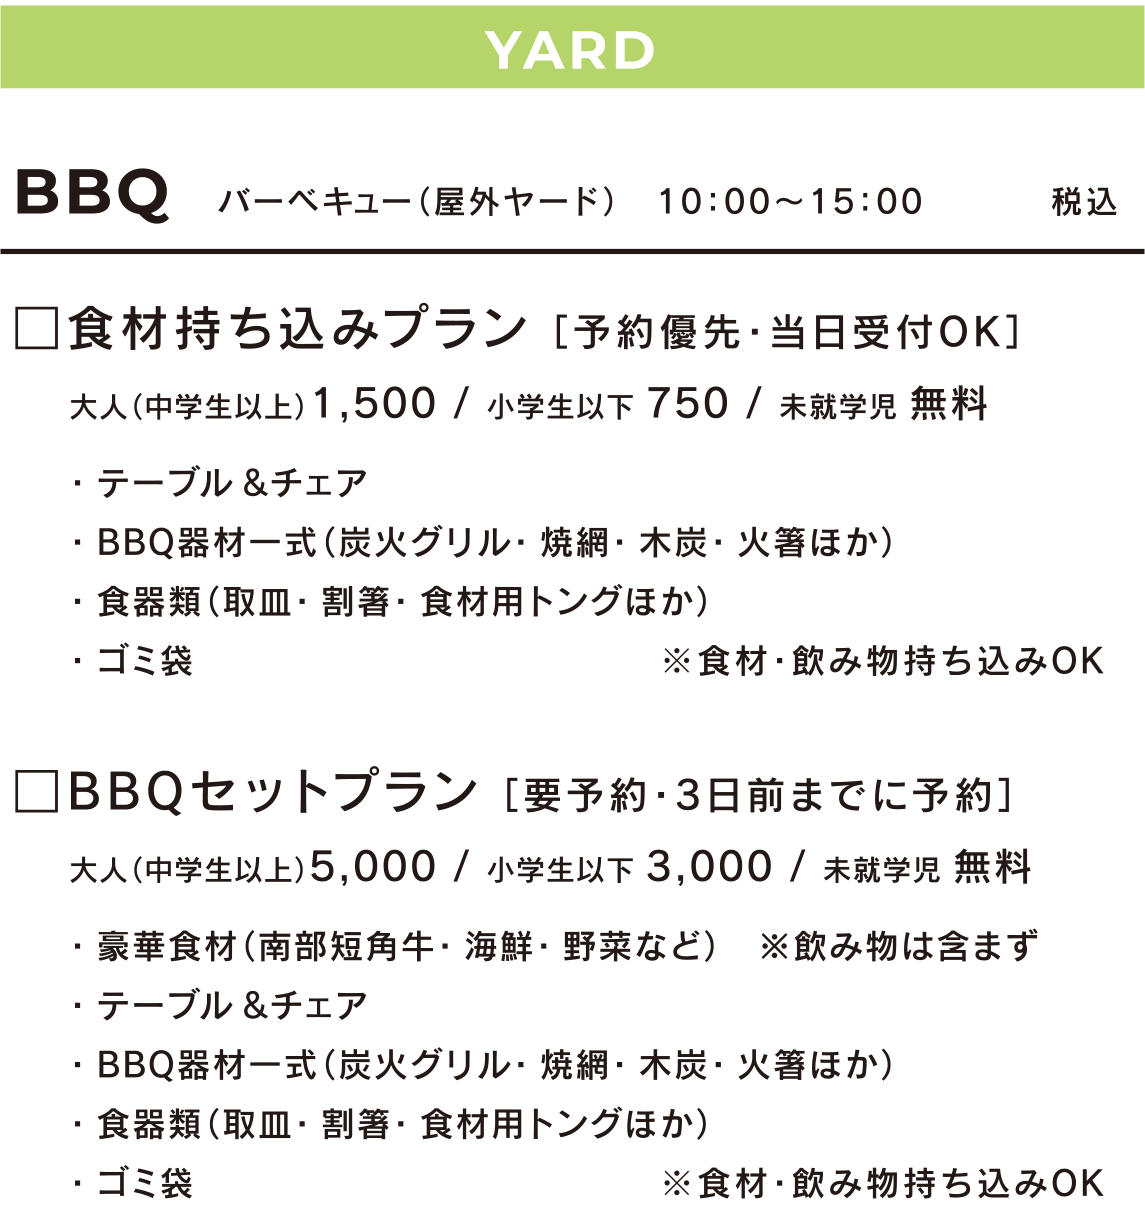 YARD BBQ［食材持ち込みプラン、BBQセットプラン］